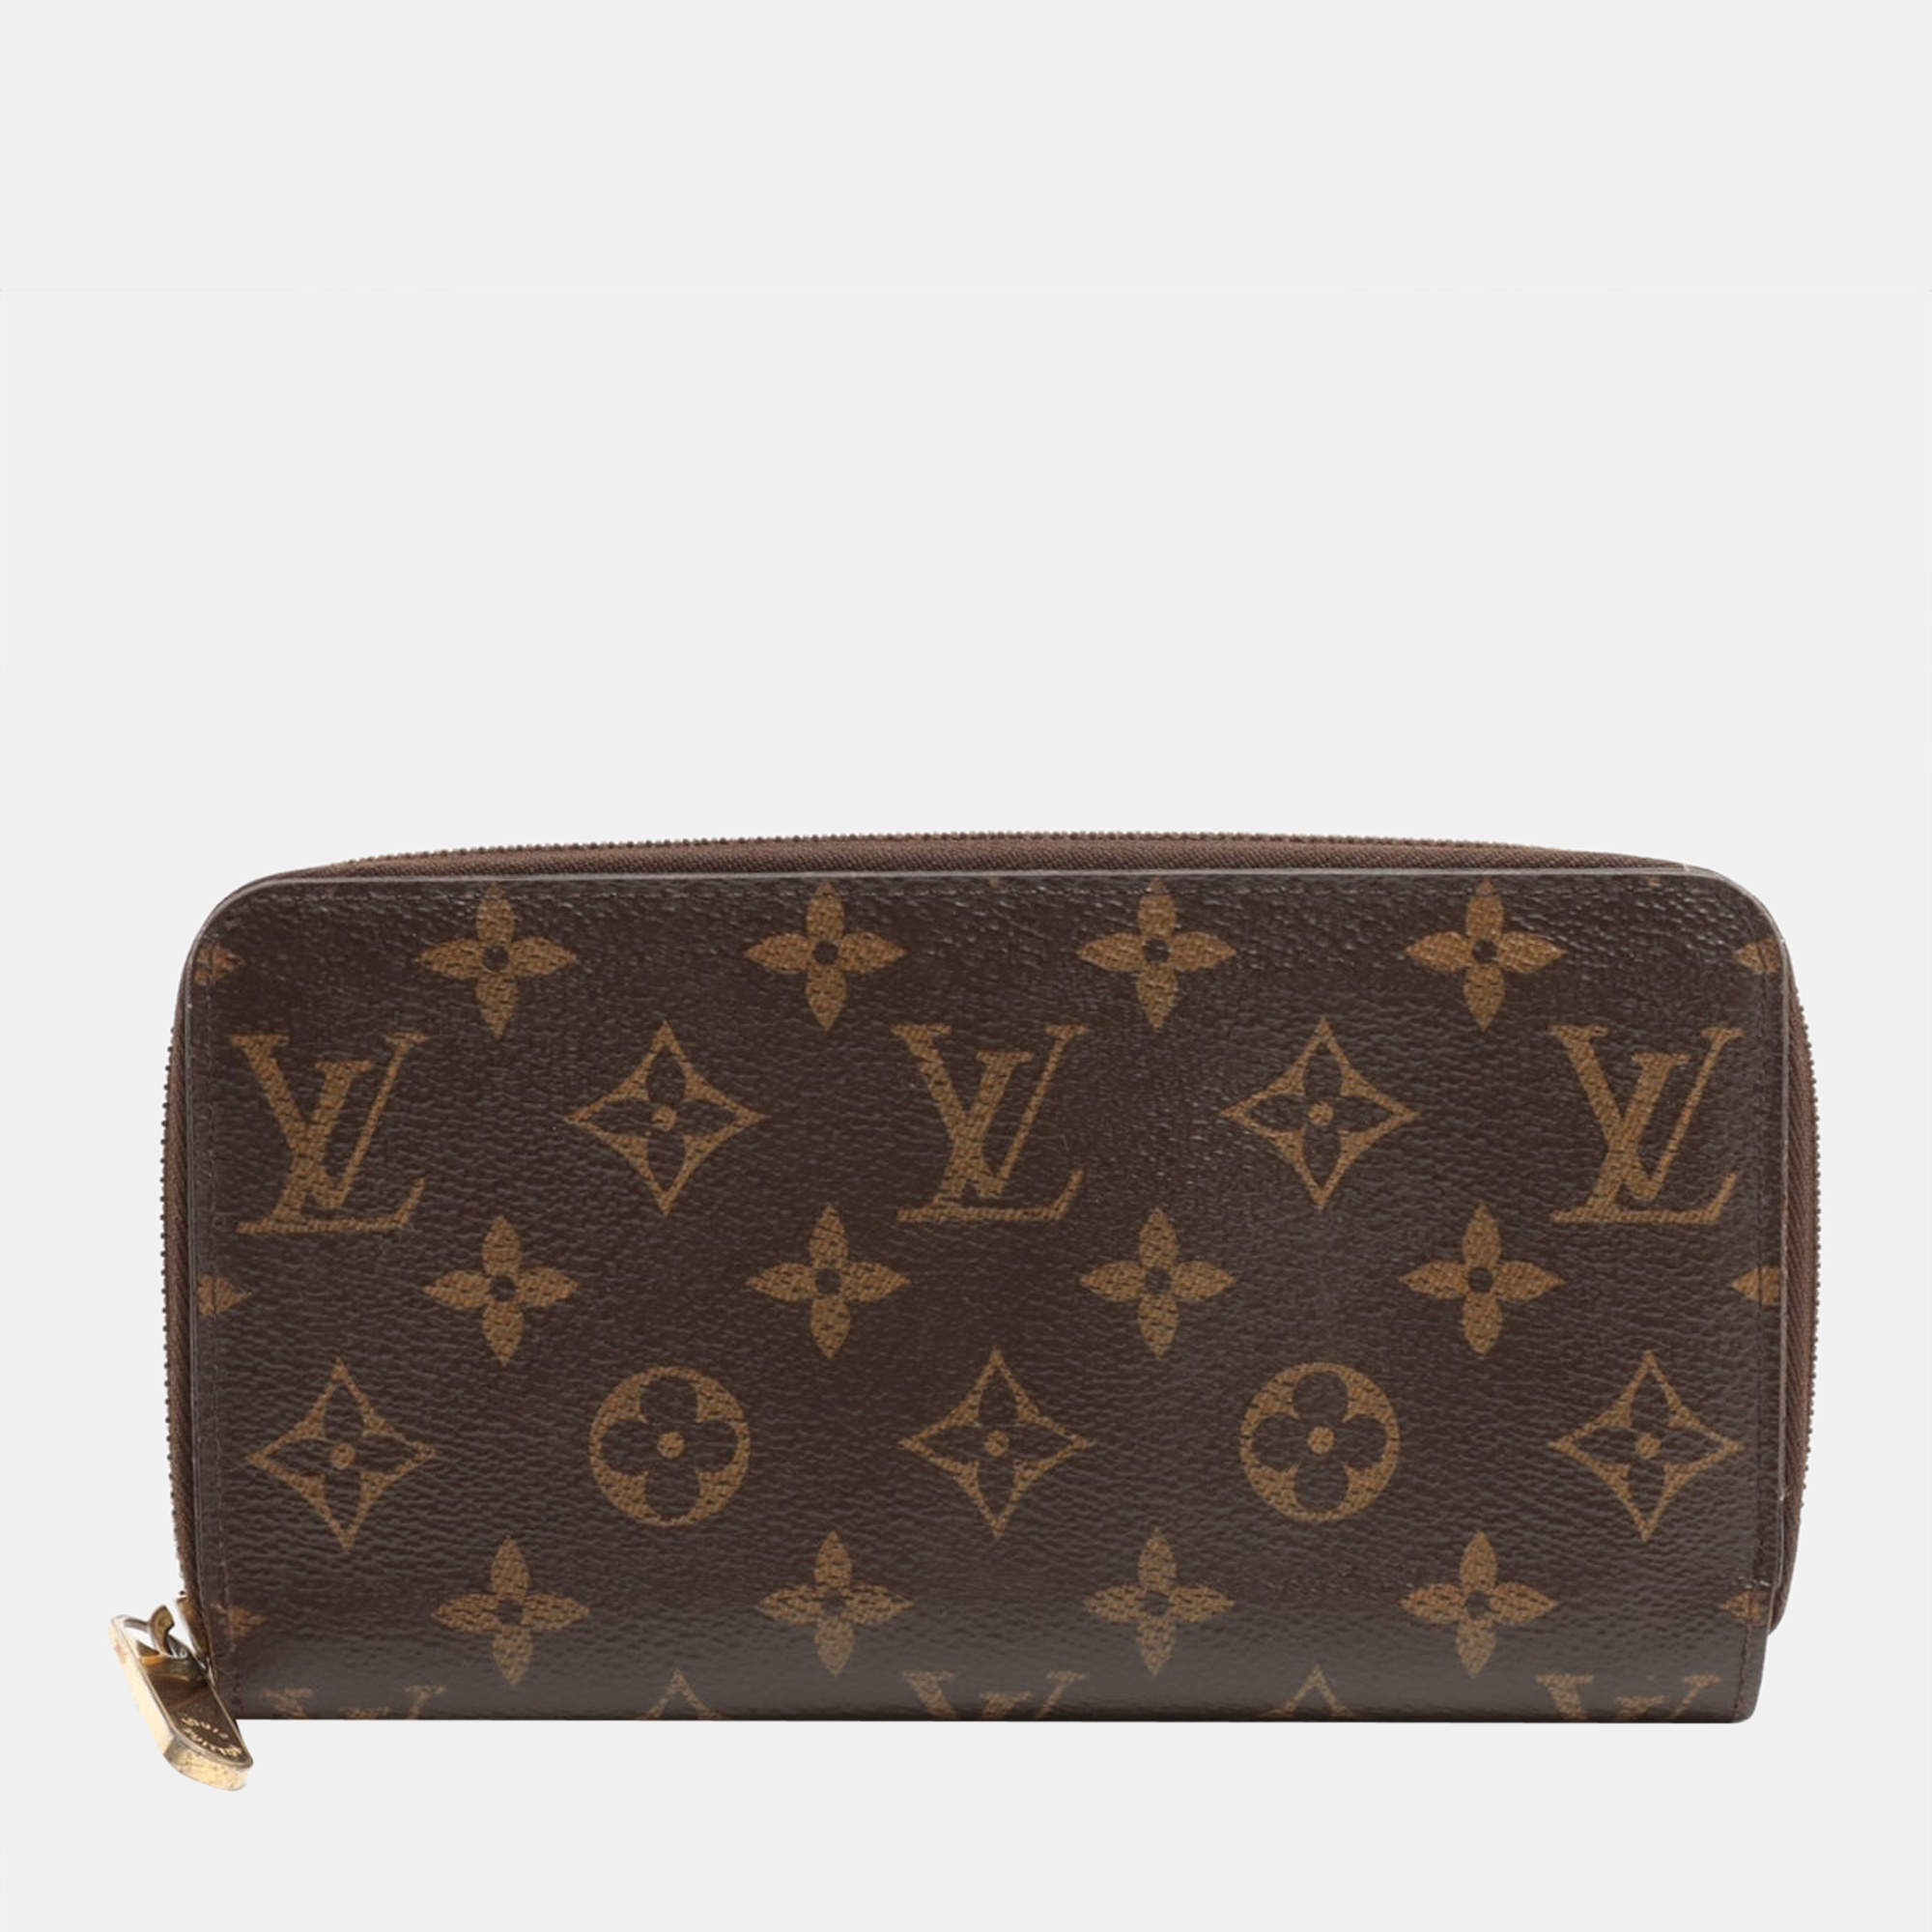 Date Code & Stamp] Louis Vuitton Monogram Long Zip Around Wallet